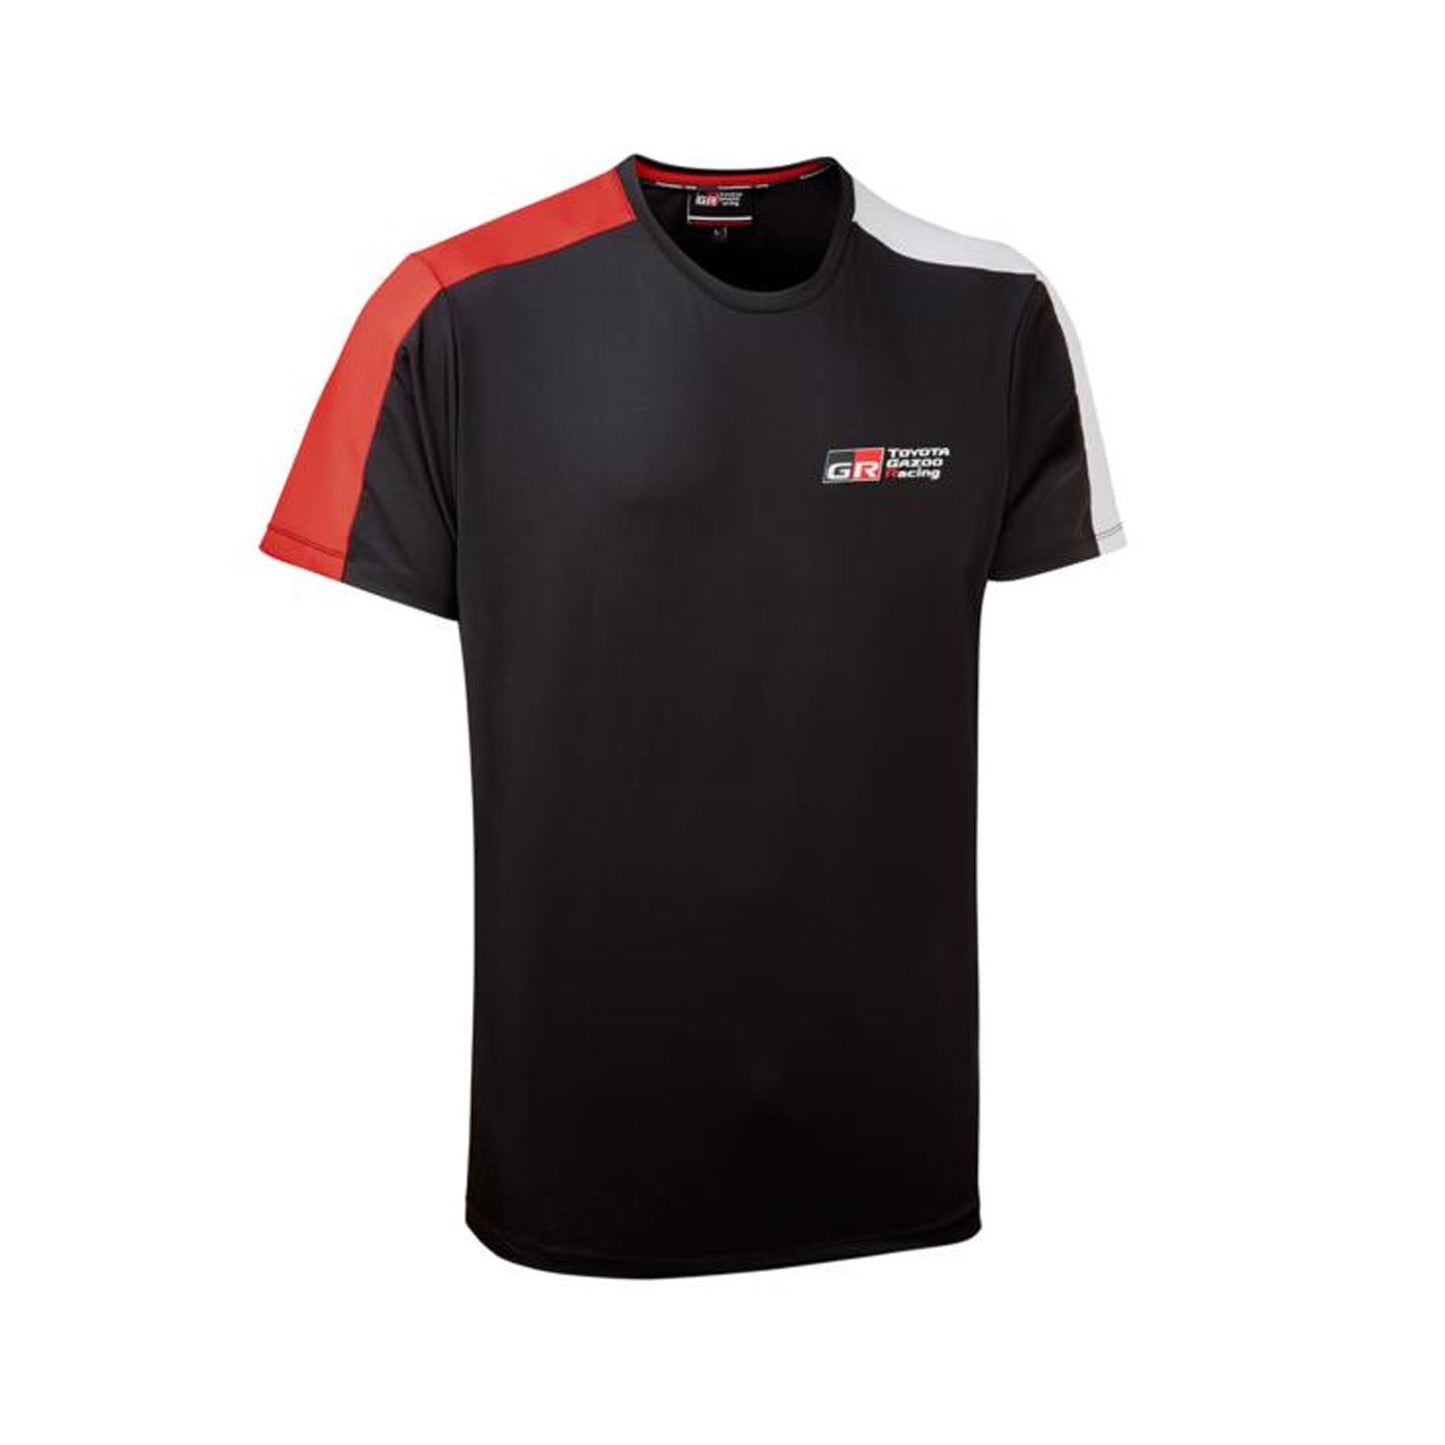 2022 Toyota Gazoo Racing Black Lifestyle Men's T-shirt